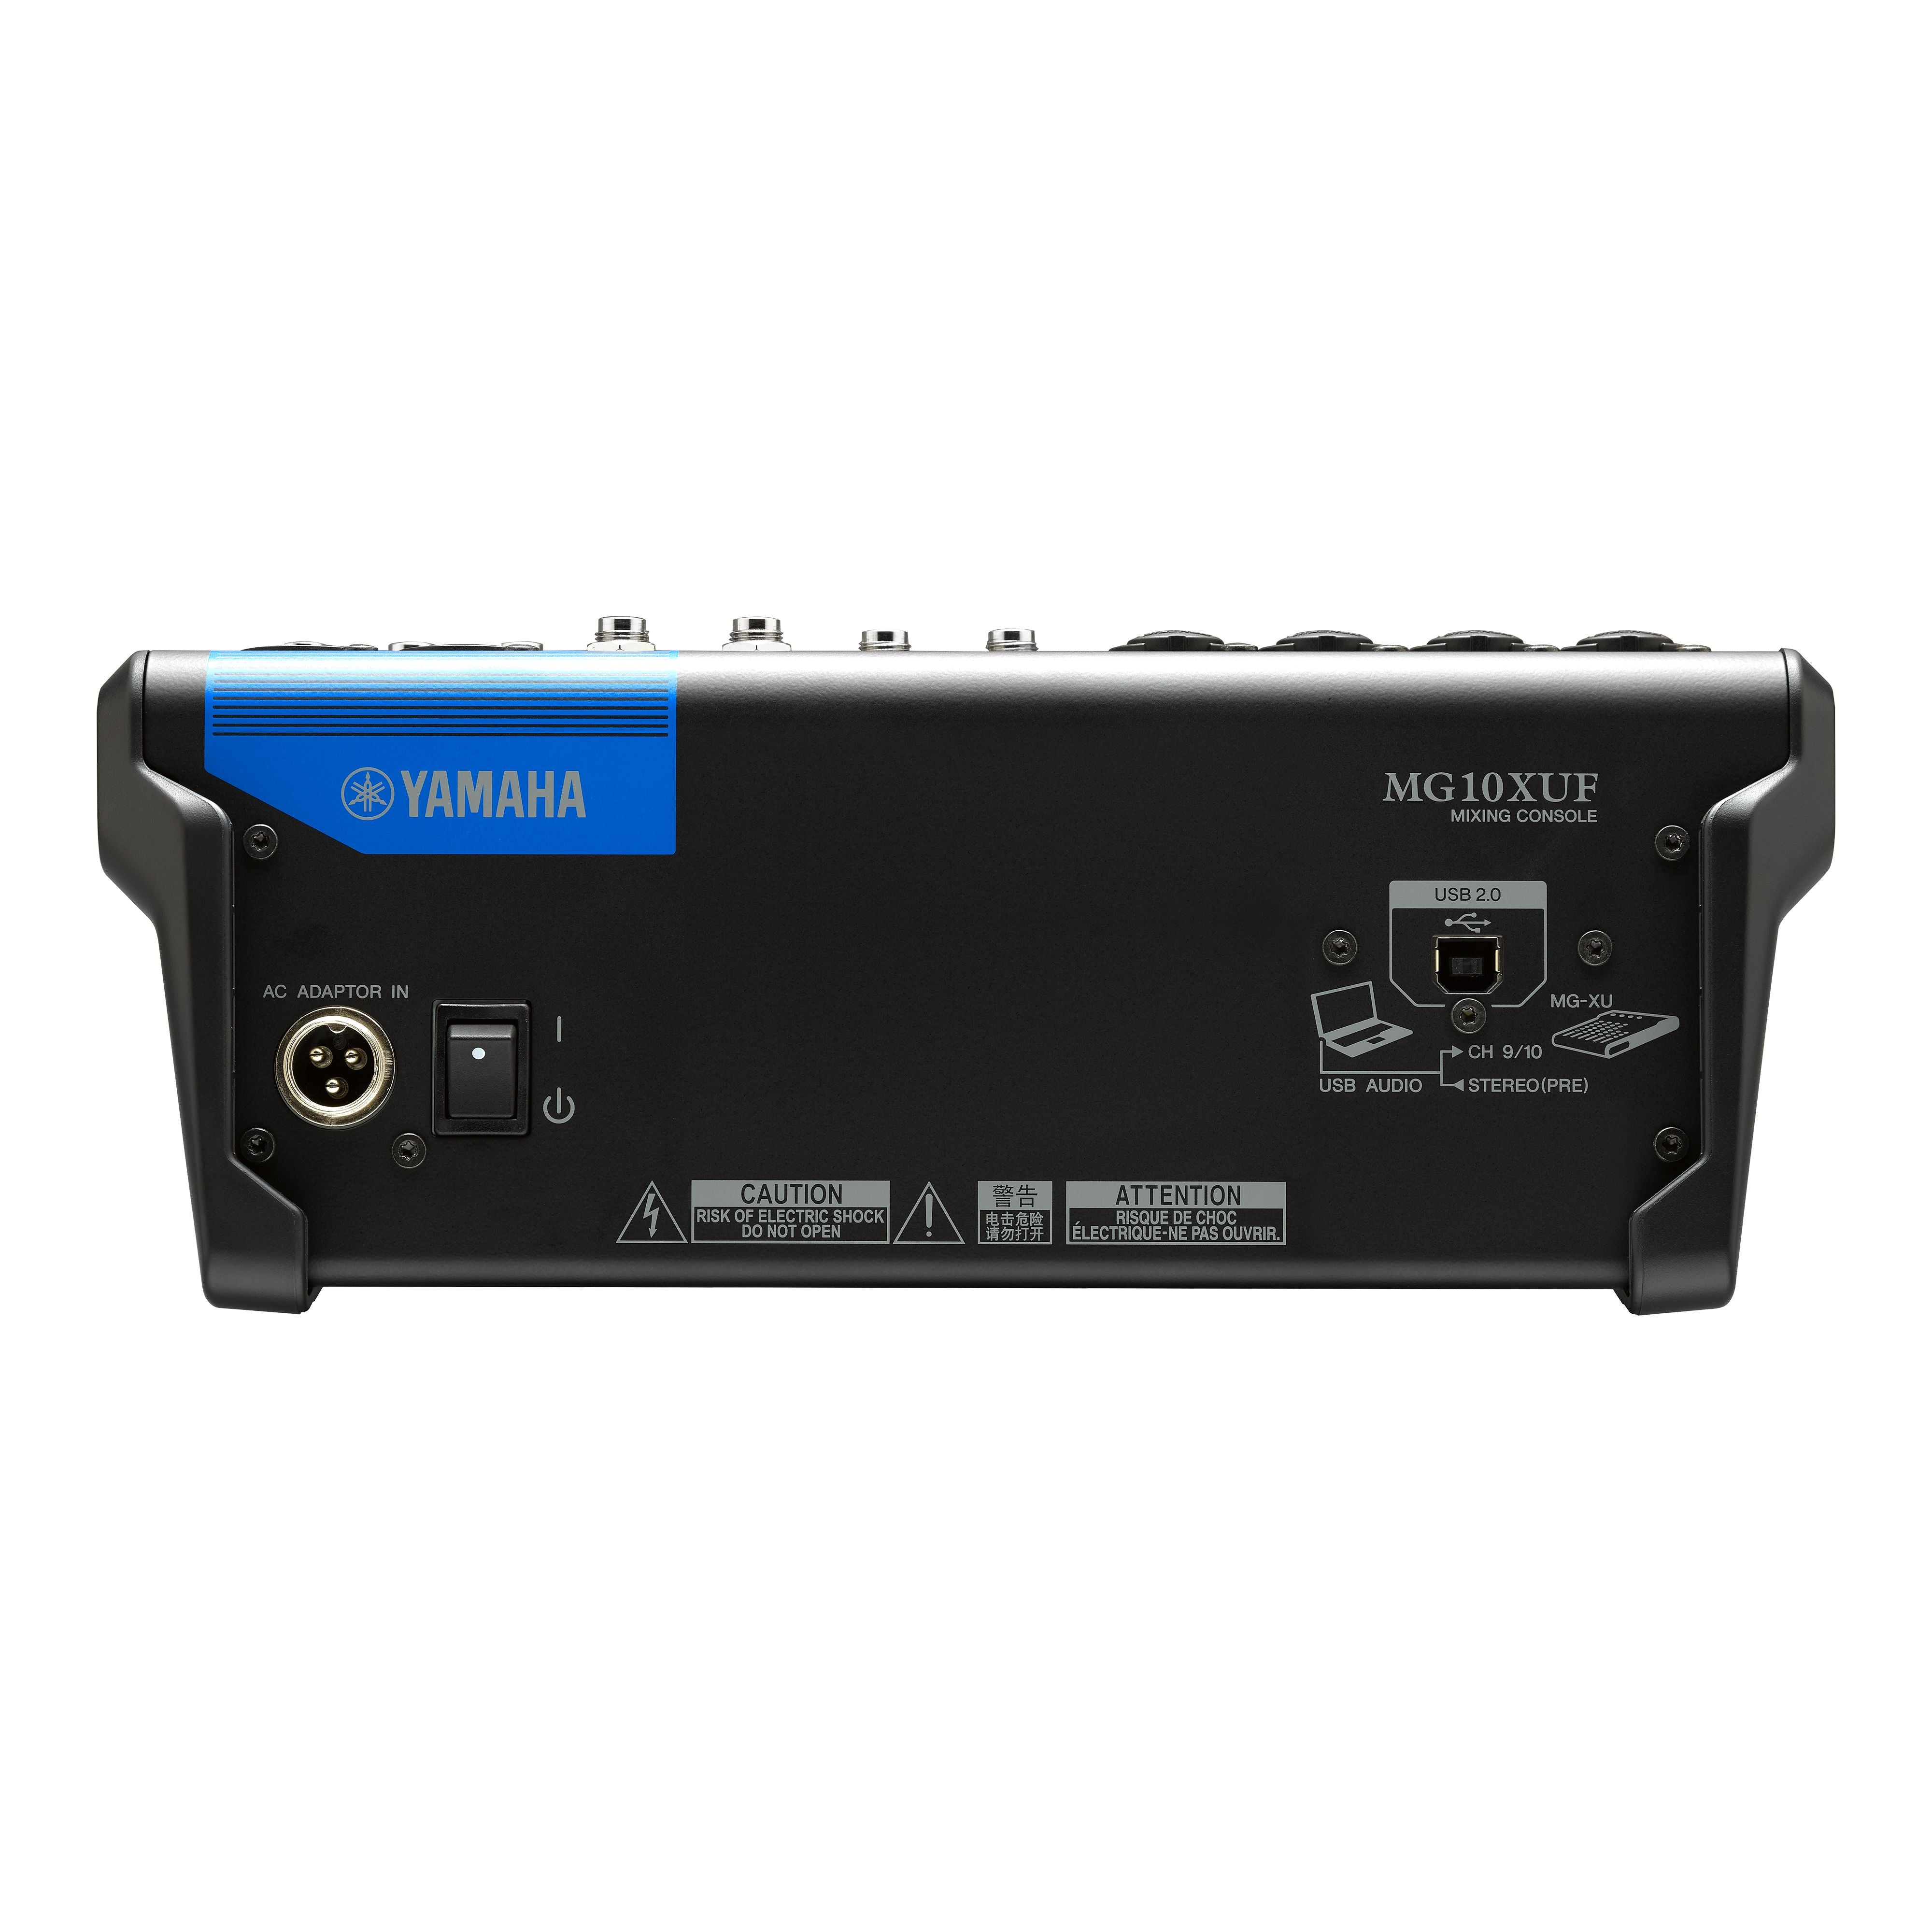 Yamaha Mixer MG10XUF Analog Mixer W/ Effect & USB Interface